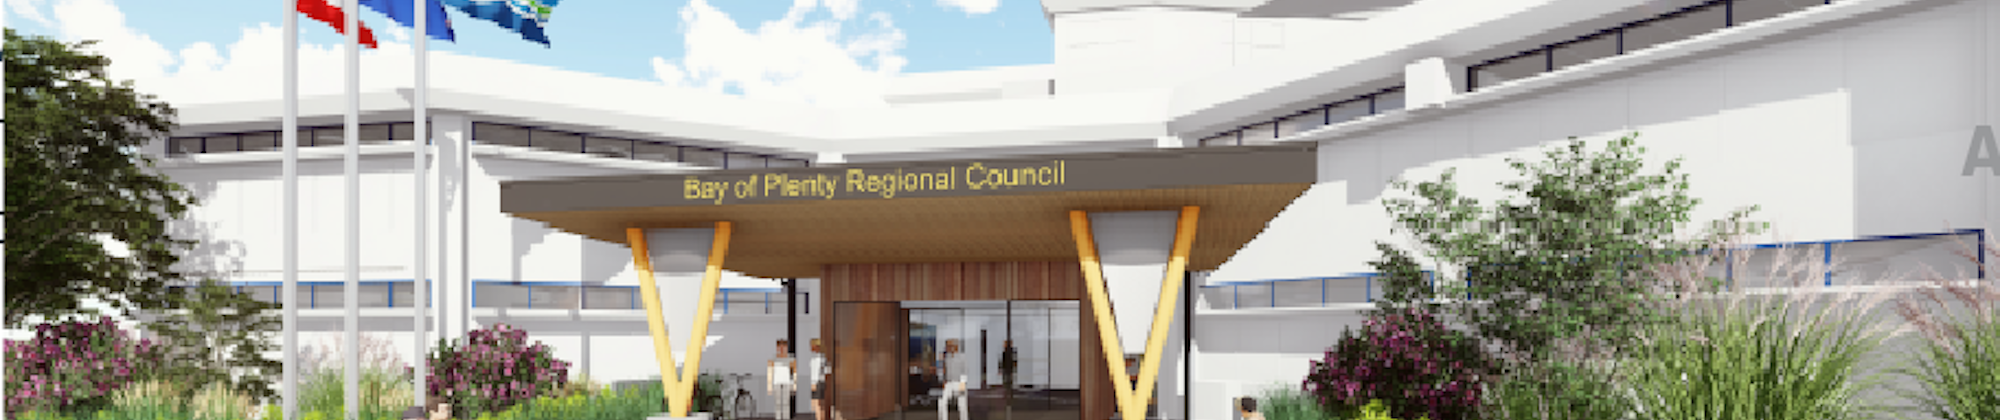 BoP Regional Council - Whakatane | Case Study | TPG NZ